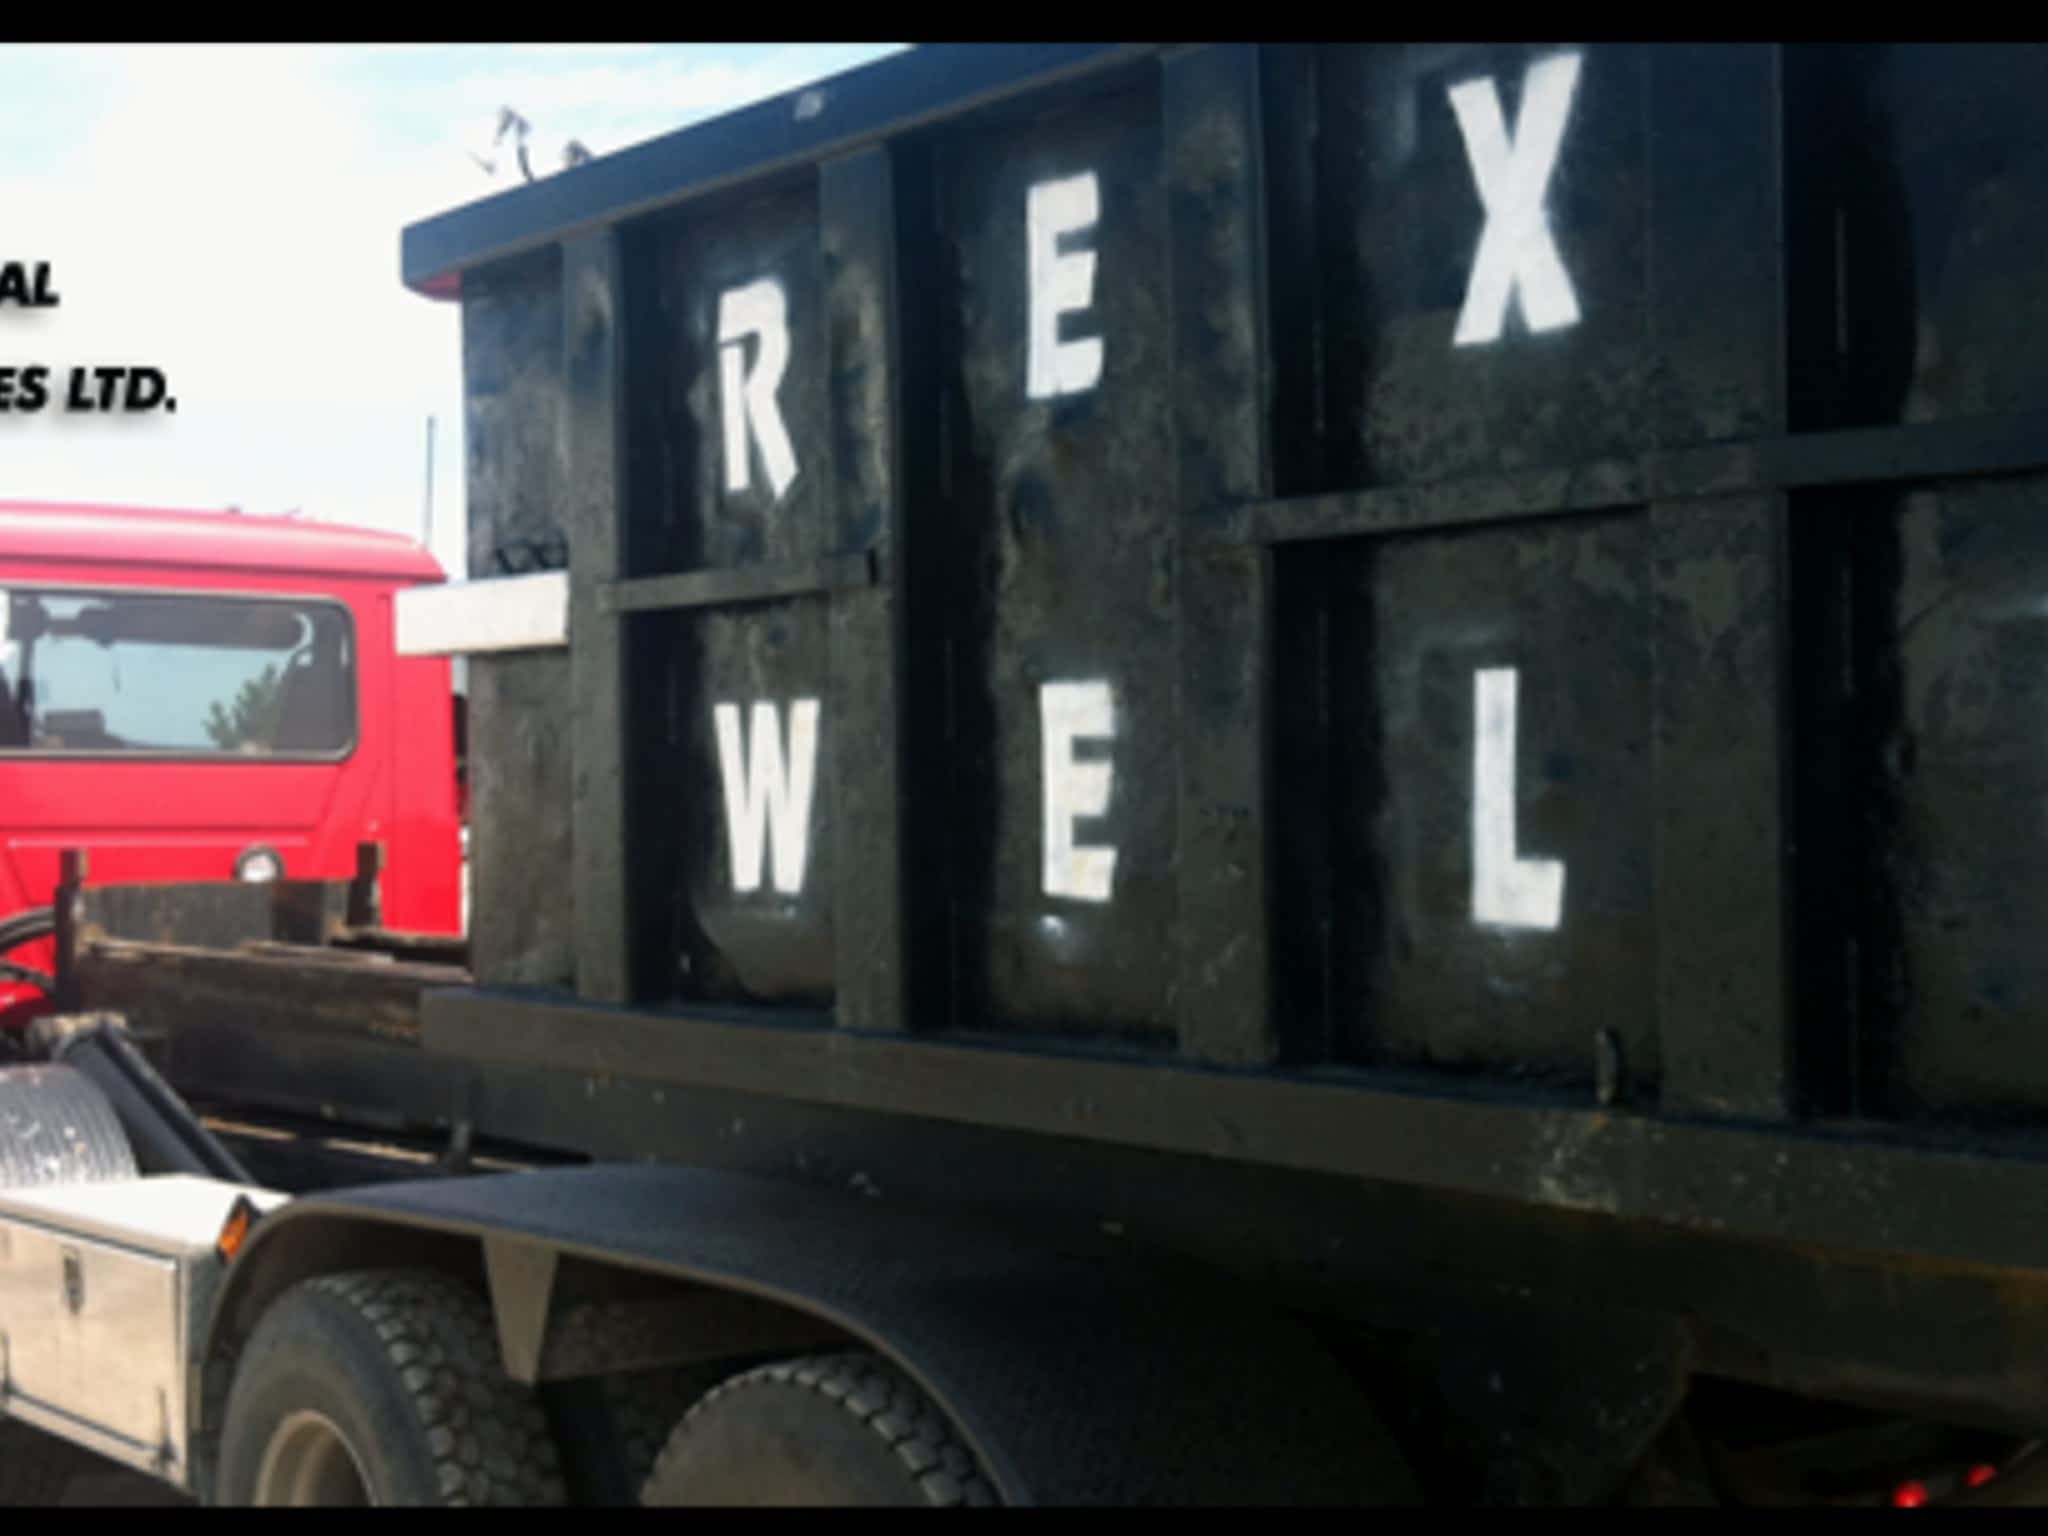 photo Rexwell Disposal Services Ltd